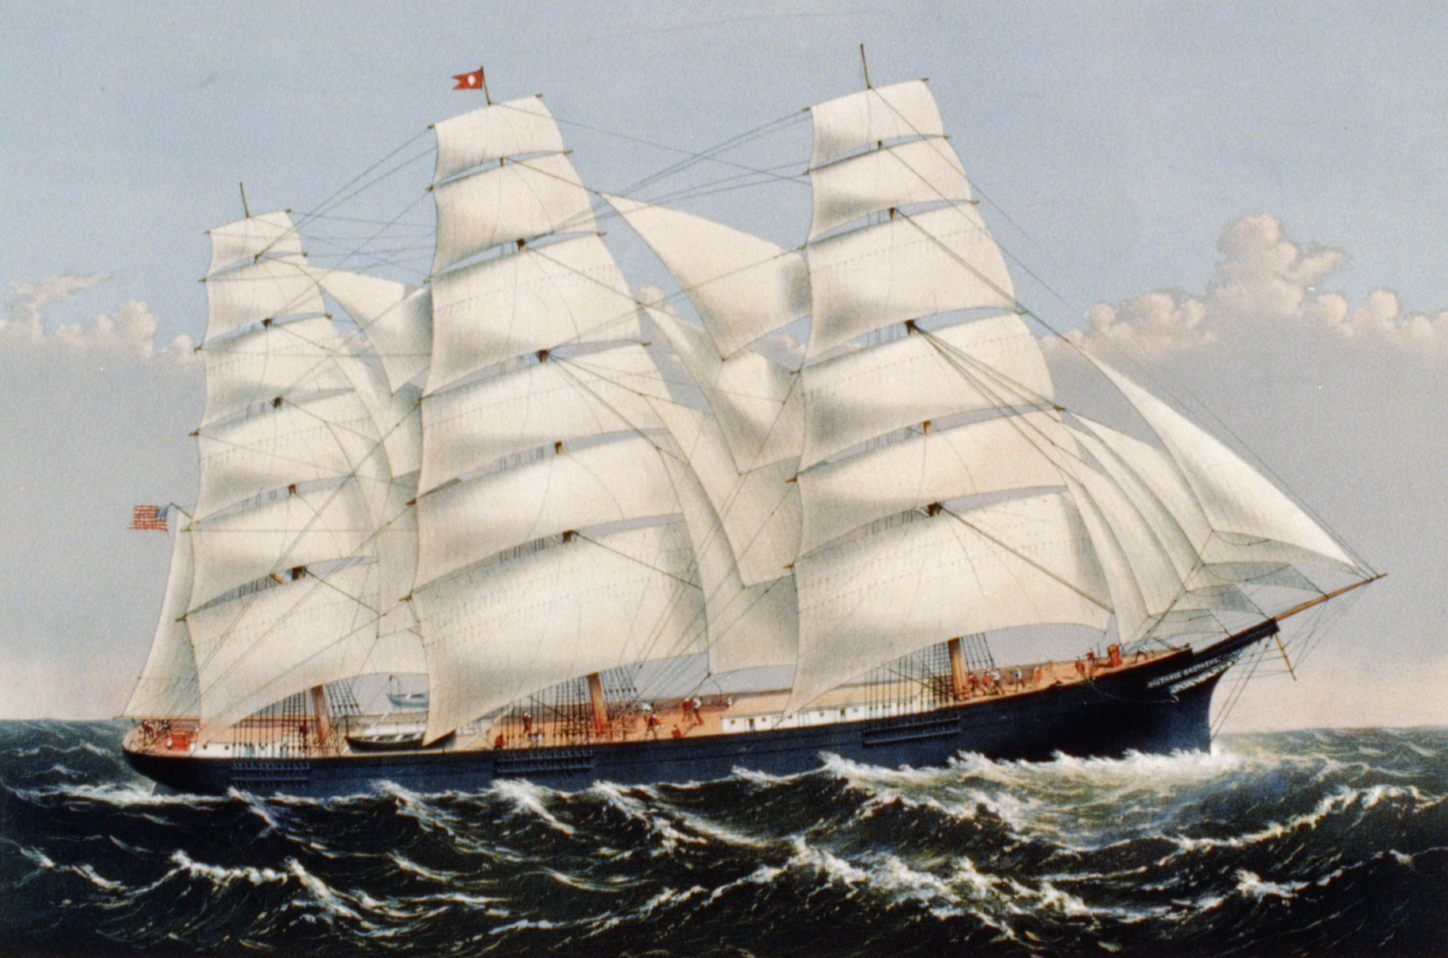 Clipper ship Three Brothers circa 1857